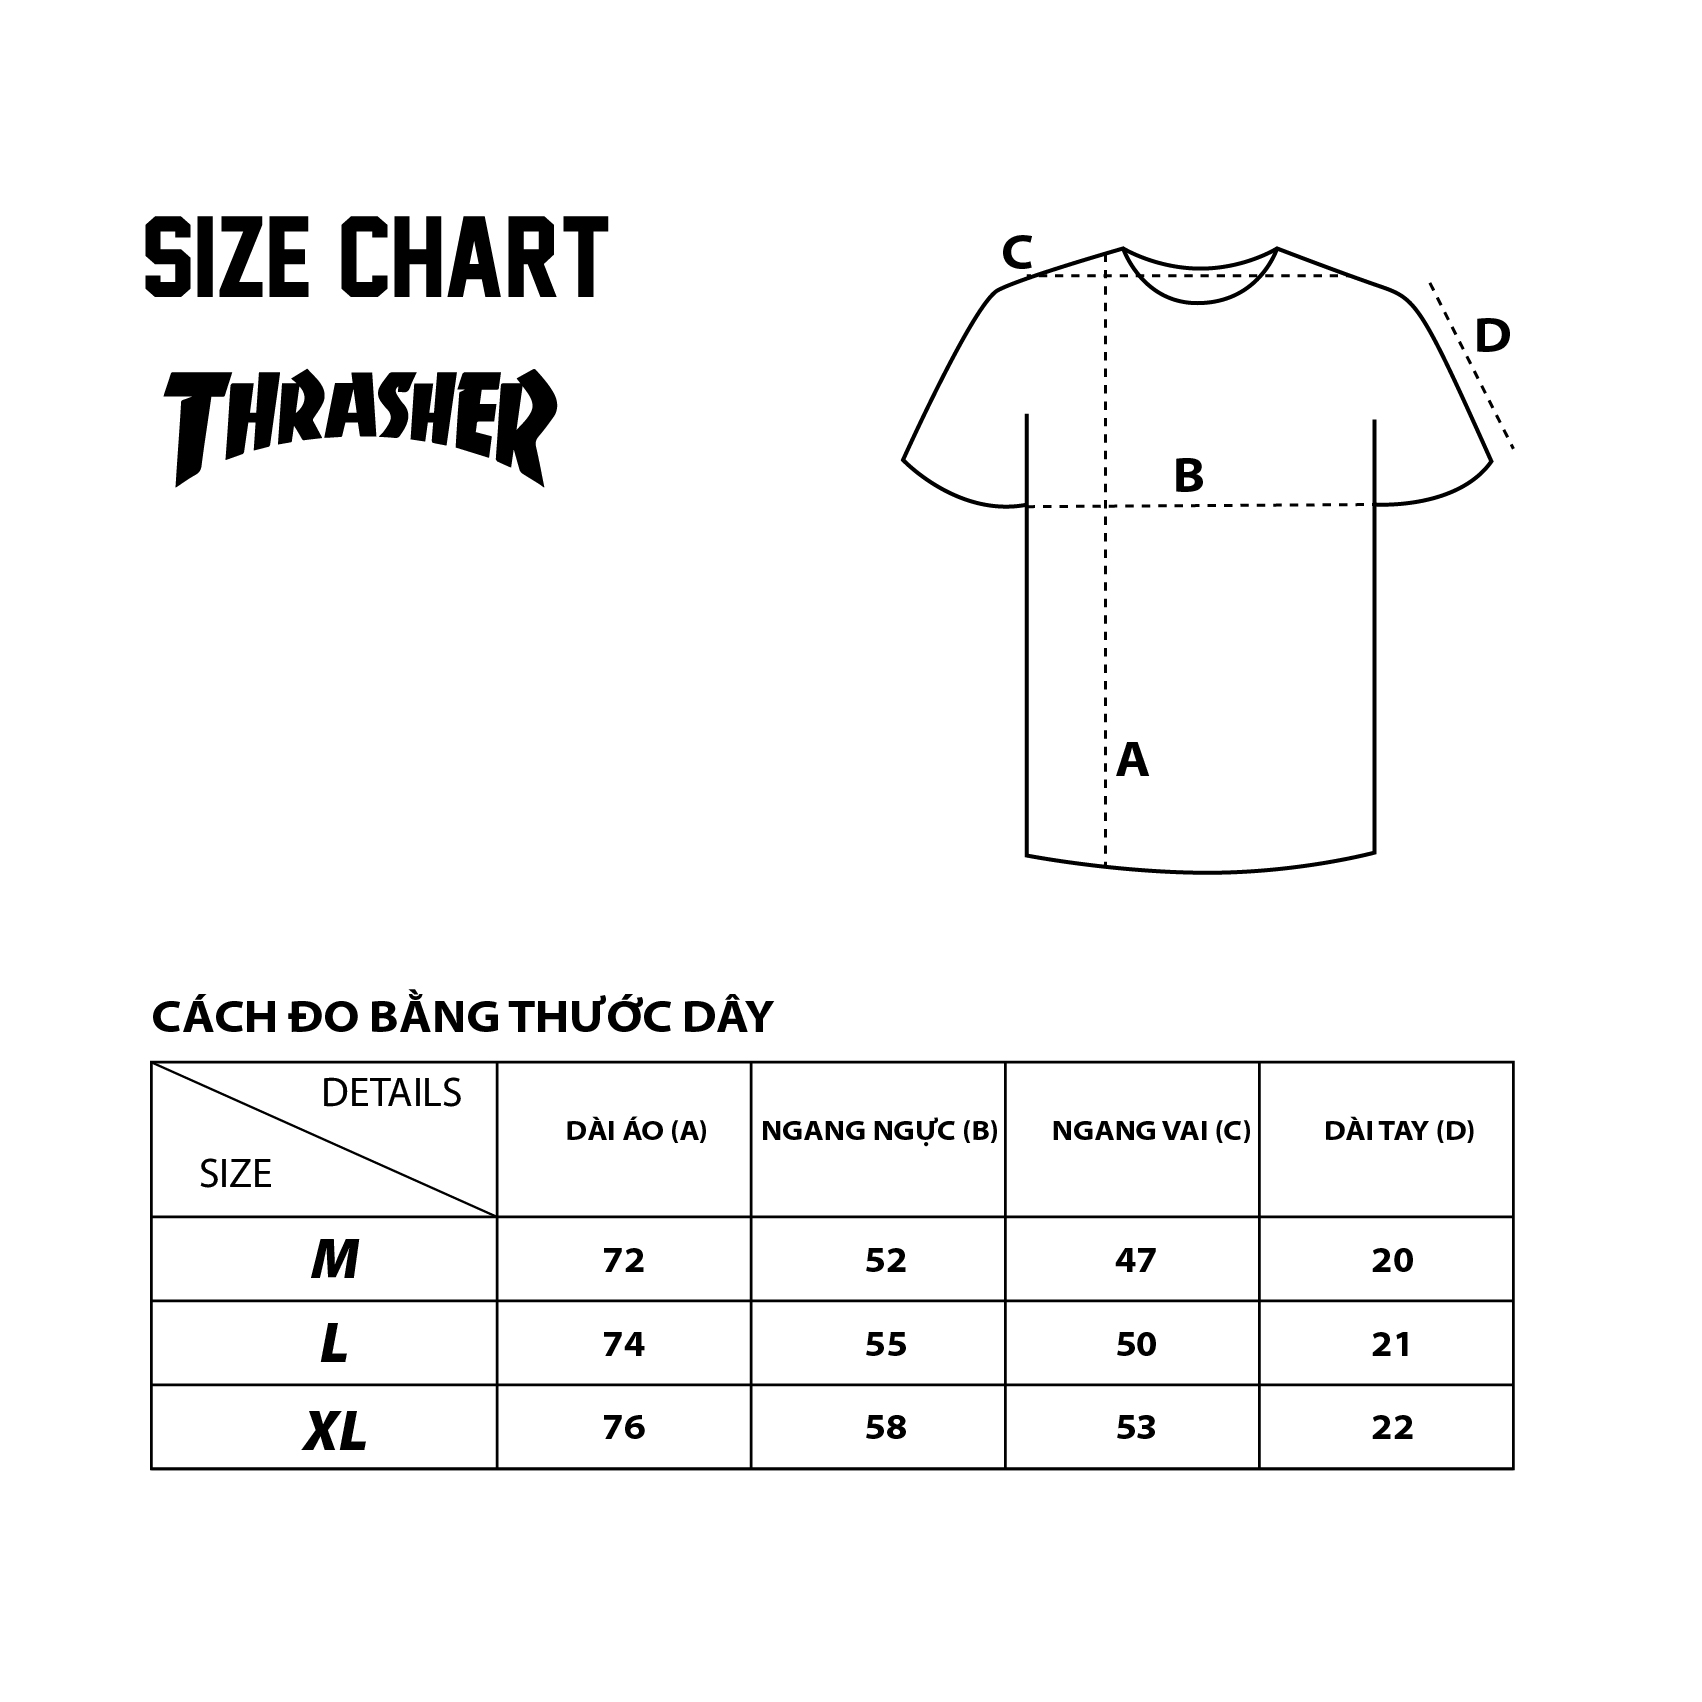 Thrasher Skate & Destroy T-Shirt - Black